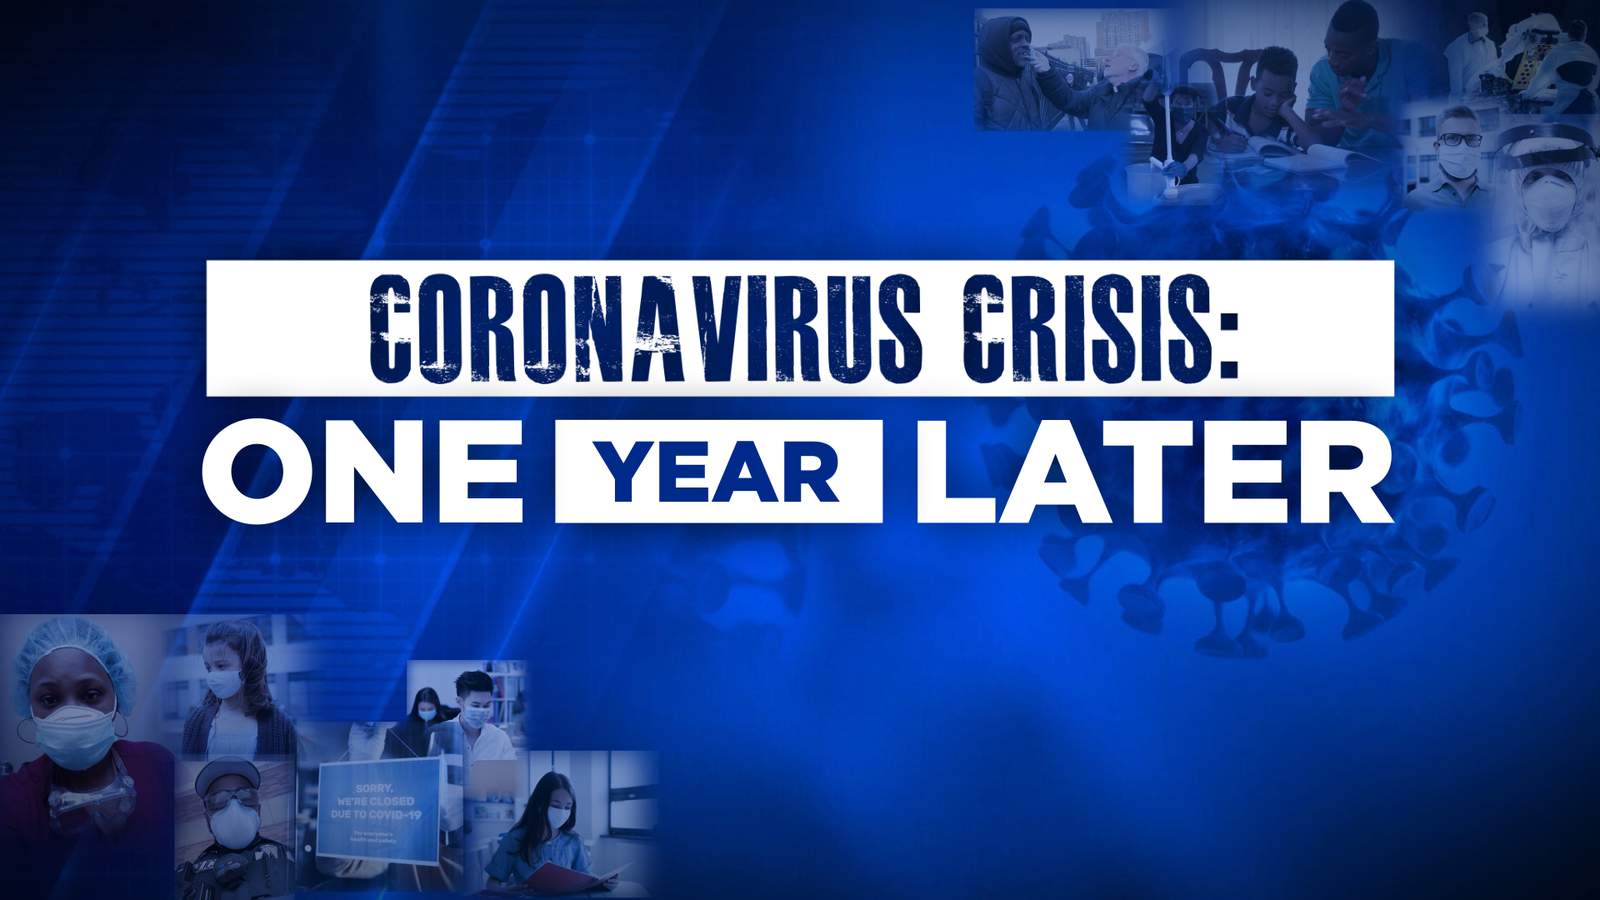 Watch full special here: ‘Coronavirus Crisis: One Year Later’